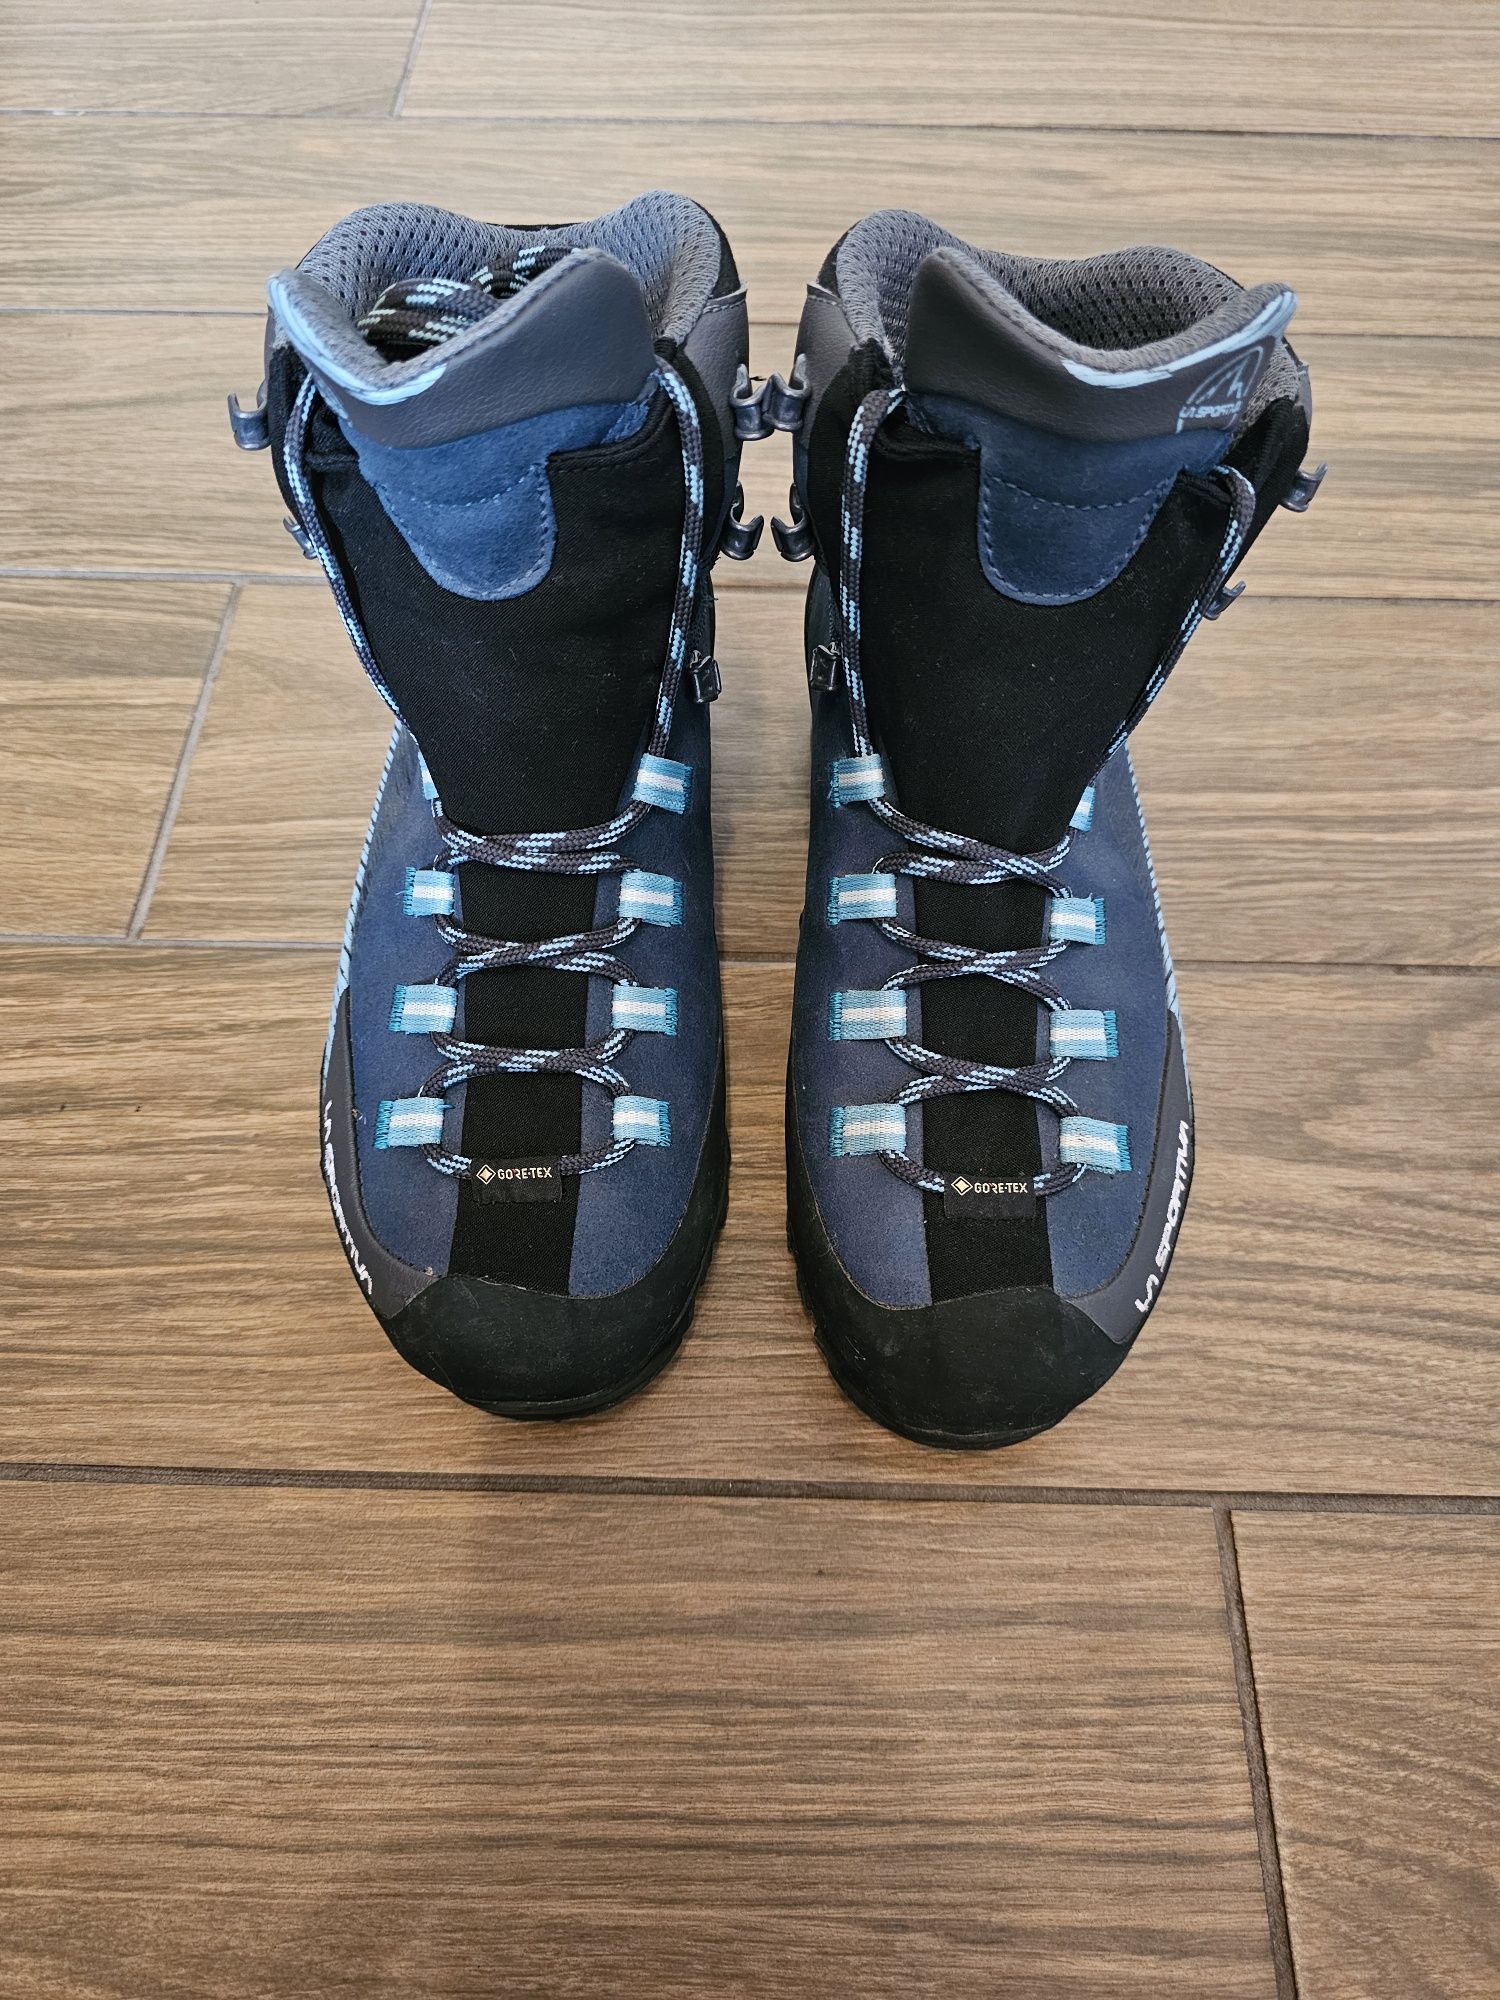 Планински трисезонни / зимни дамски обувки боти LA Sportiva Trango Trk